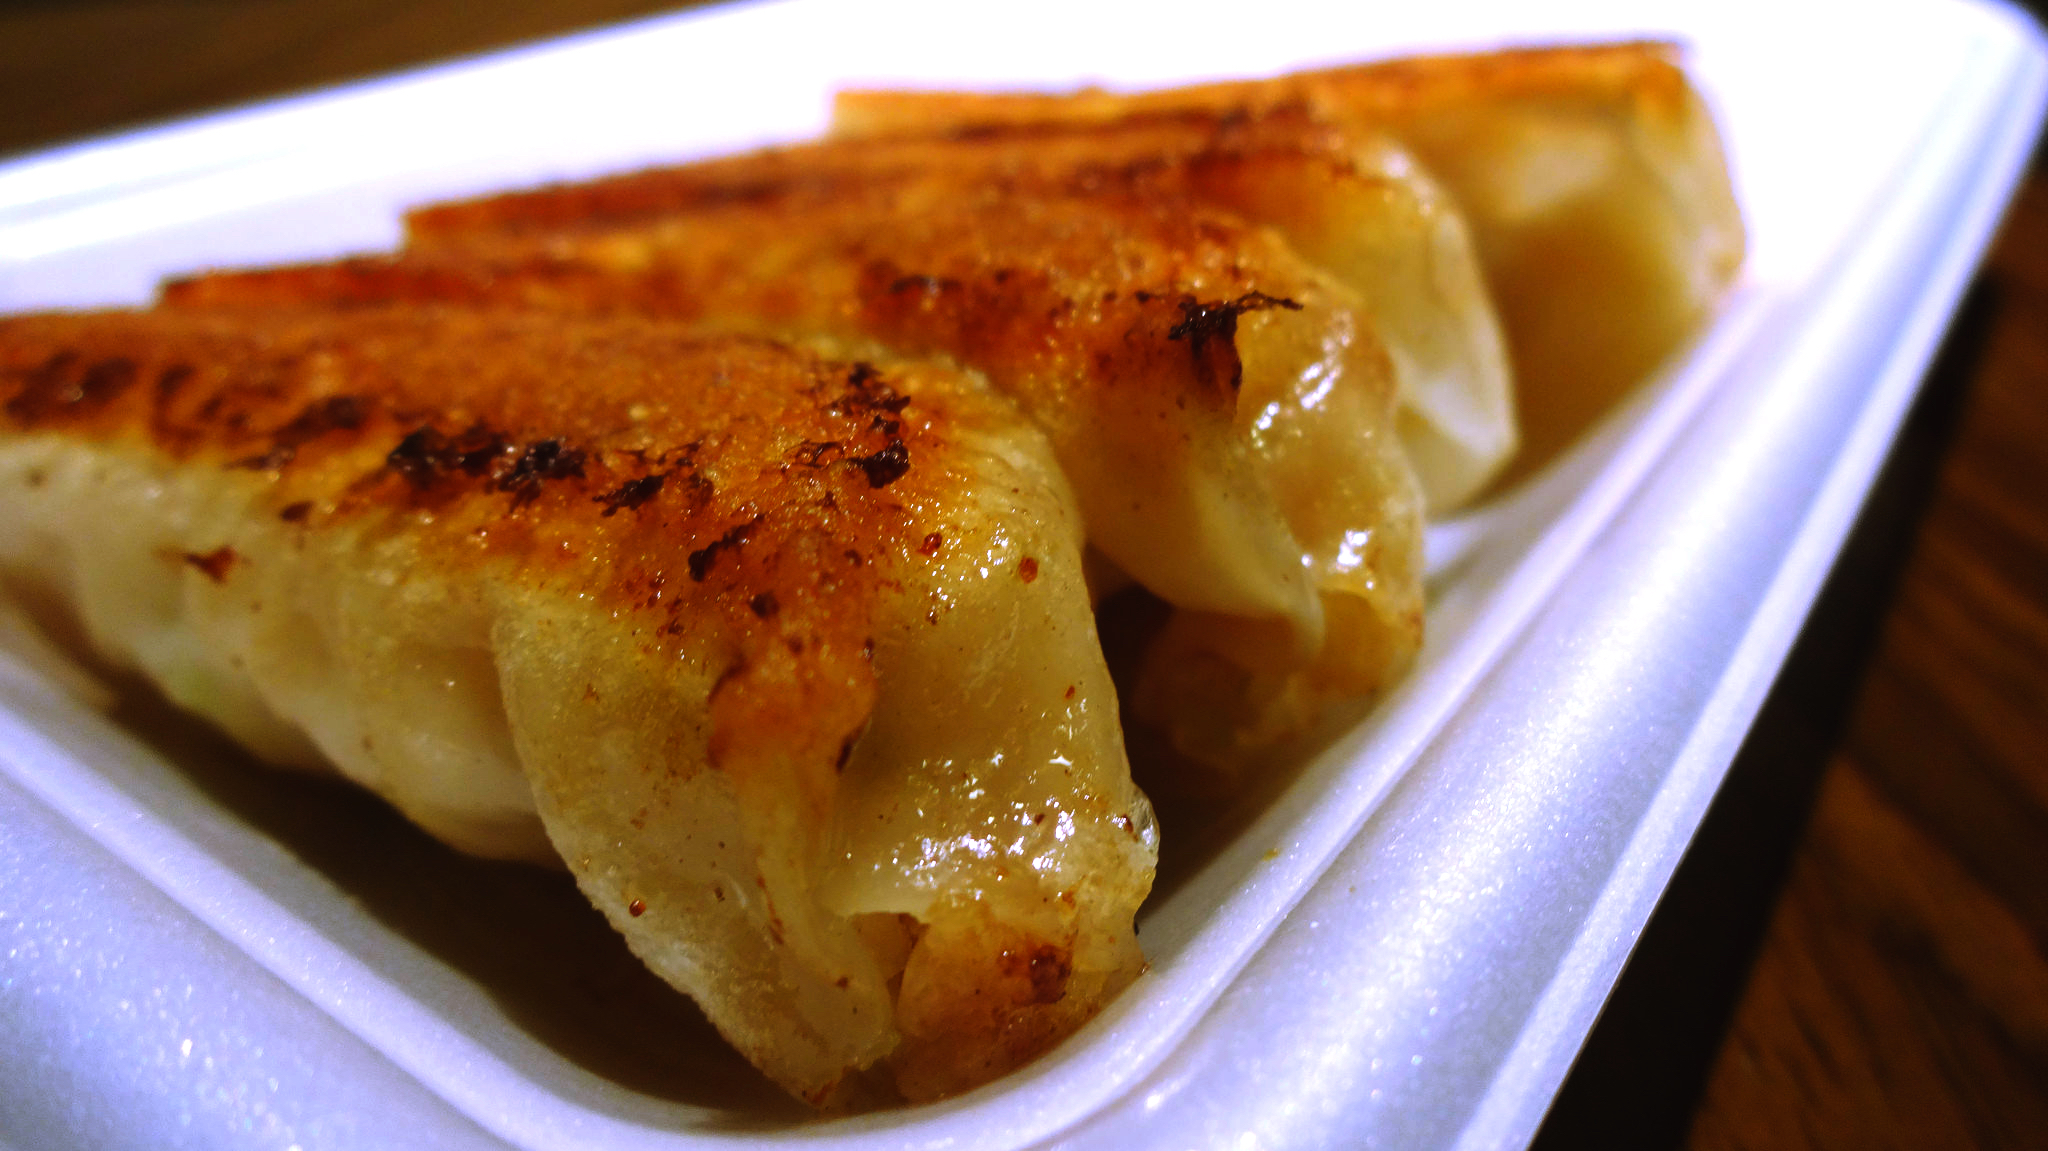 Street eats - gyoza dumpling